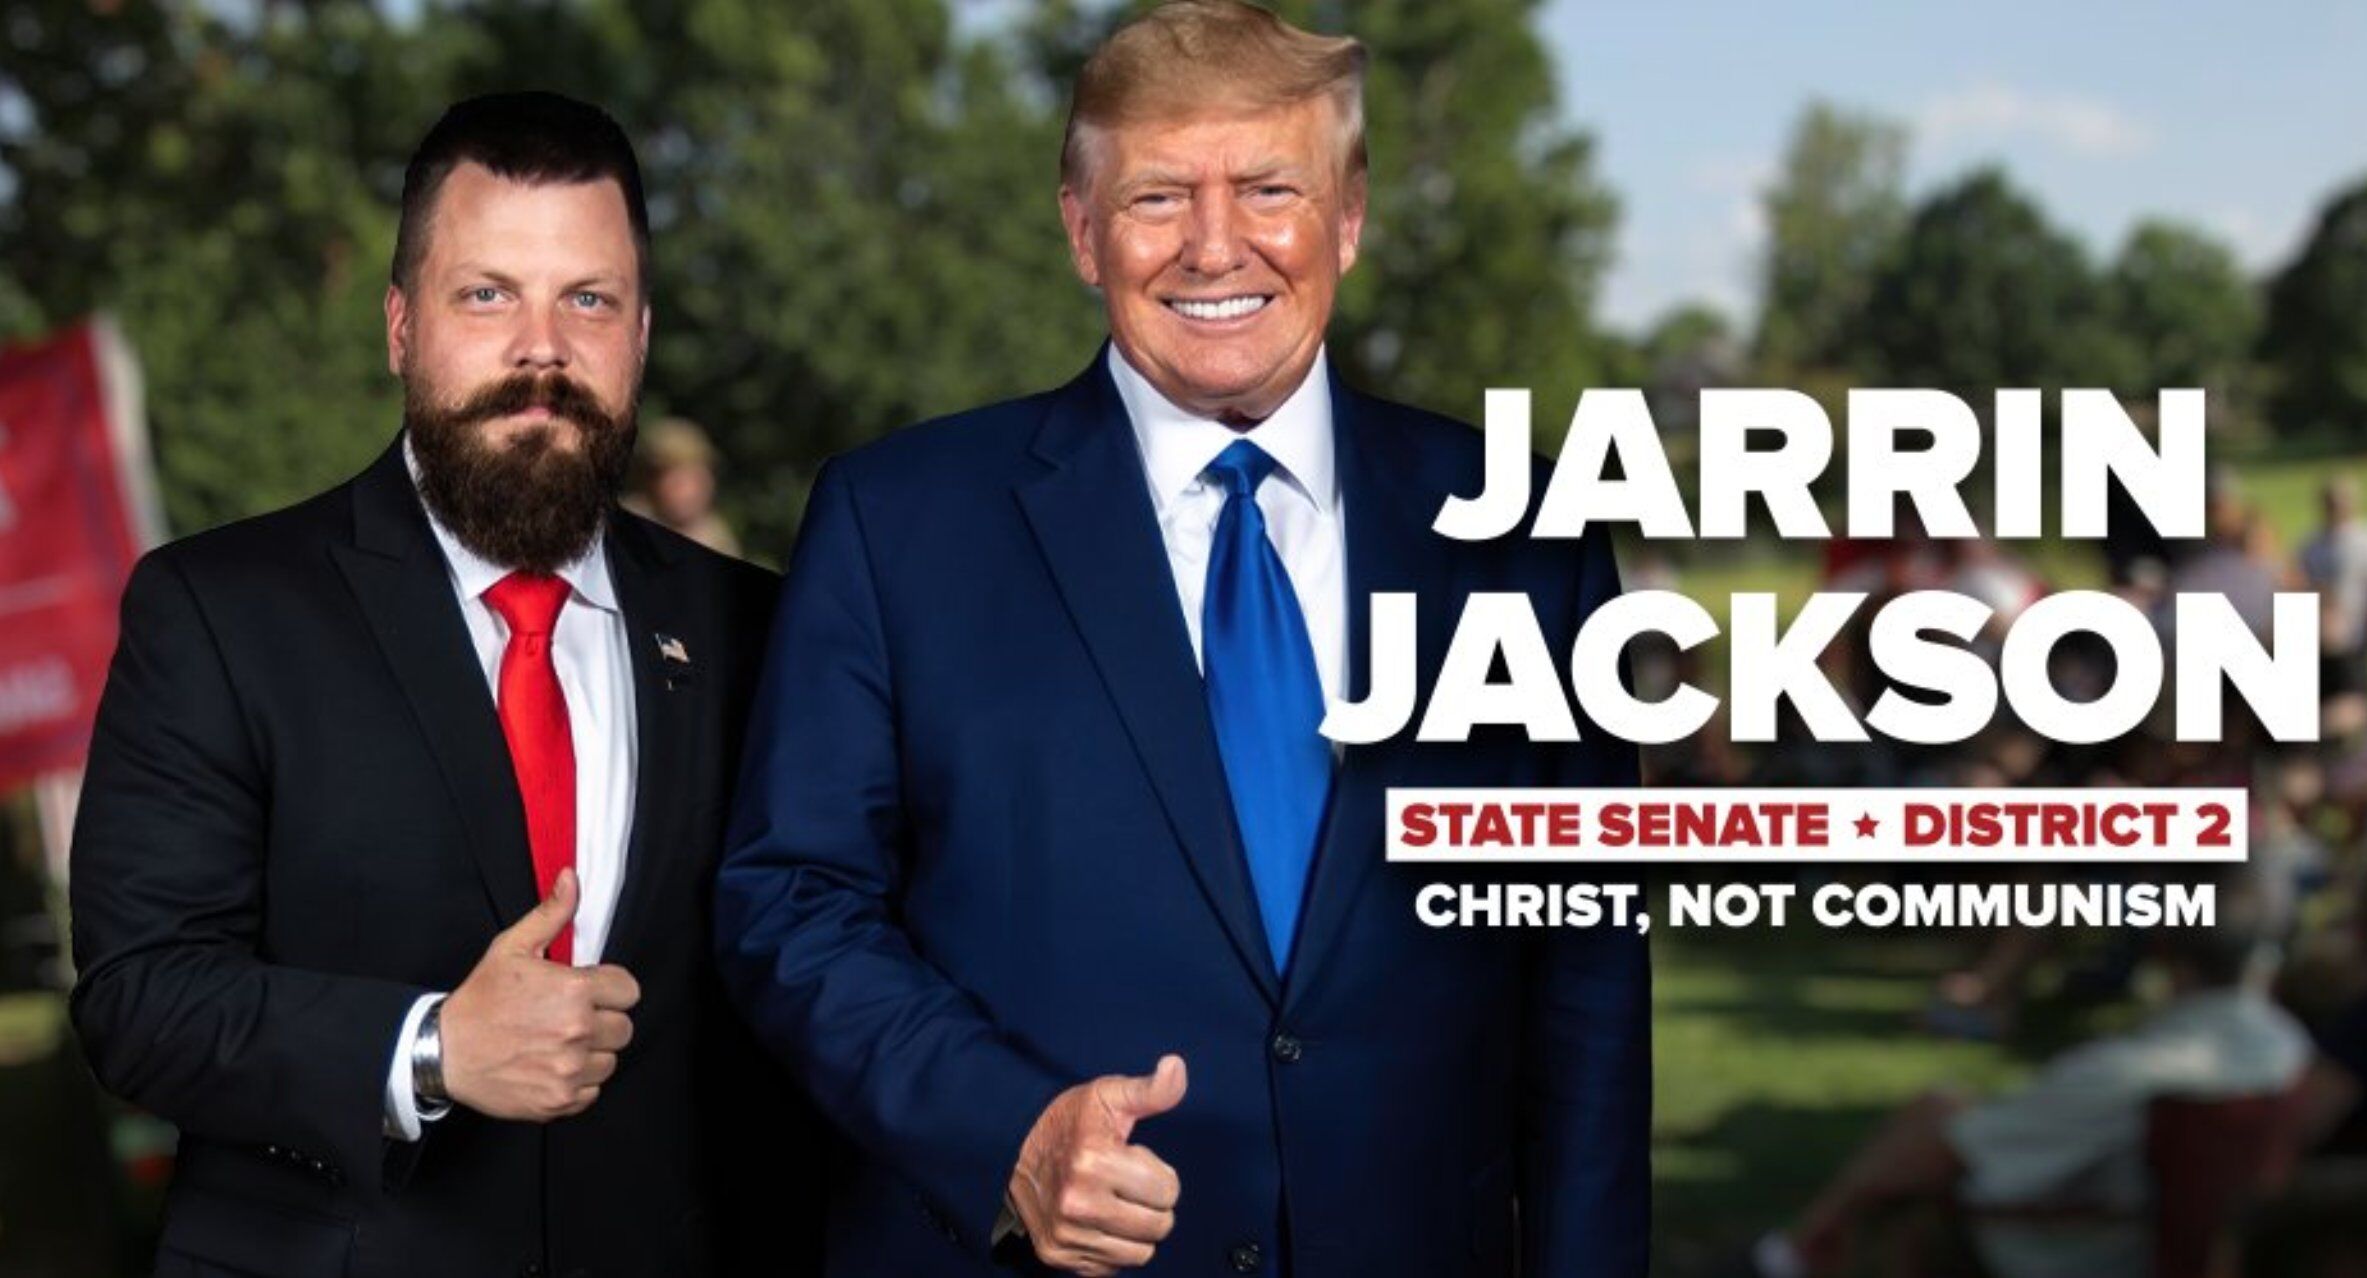 Jarrin Jackson's campaign website